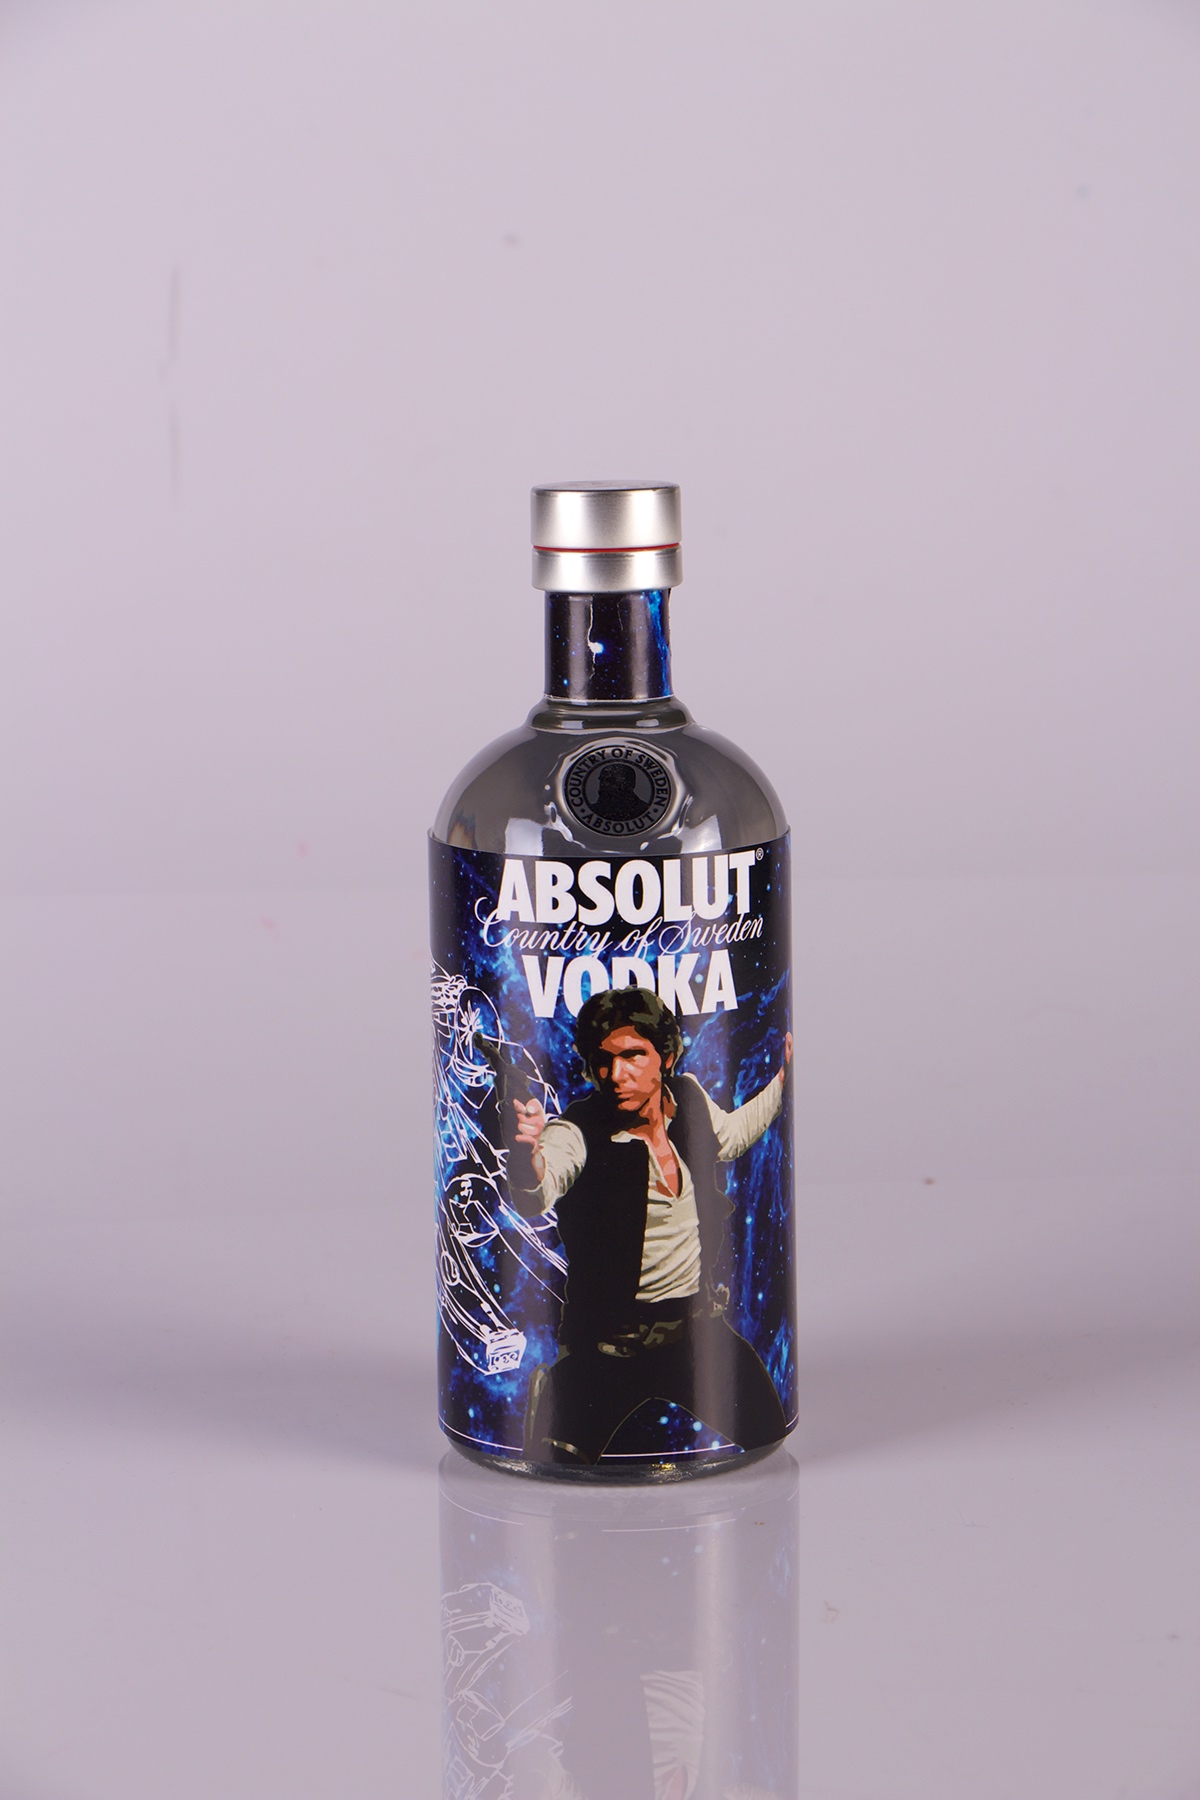 star wars Han Solo obi van kenobi yoda luke skywalker absolut Vodka bottle Label design Promotional poster creative harison ford